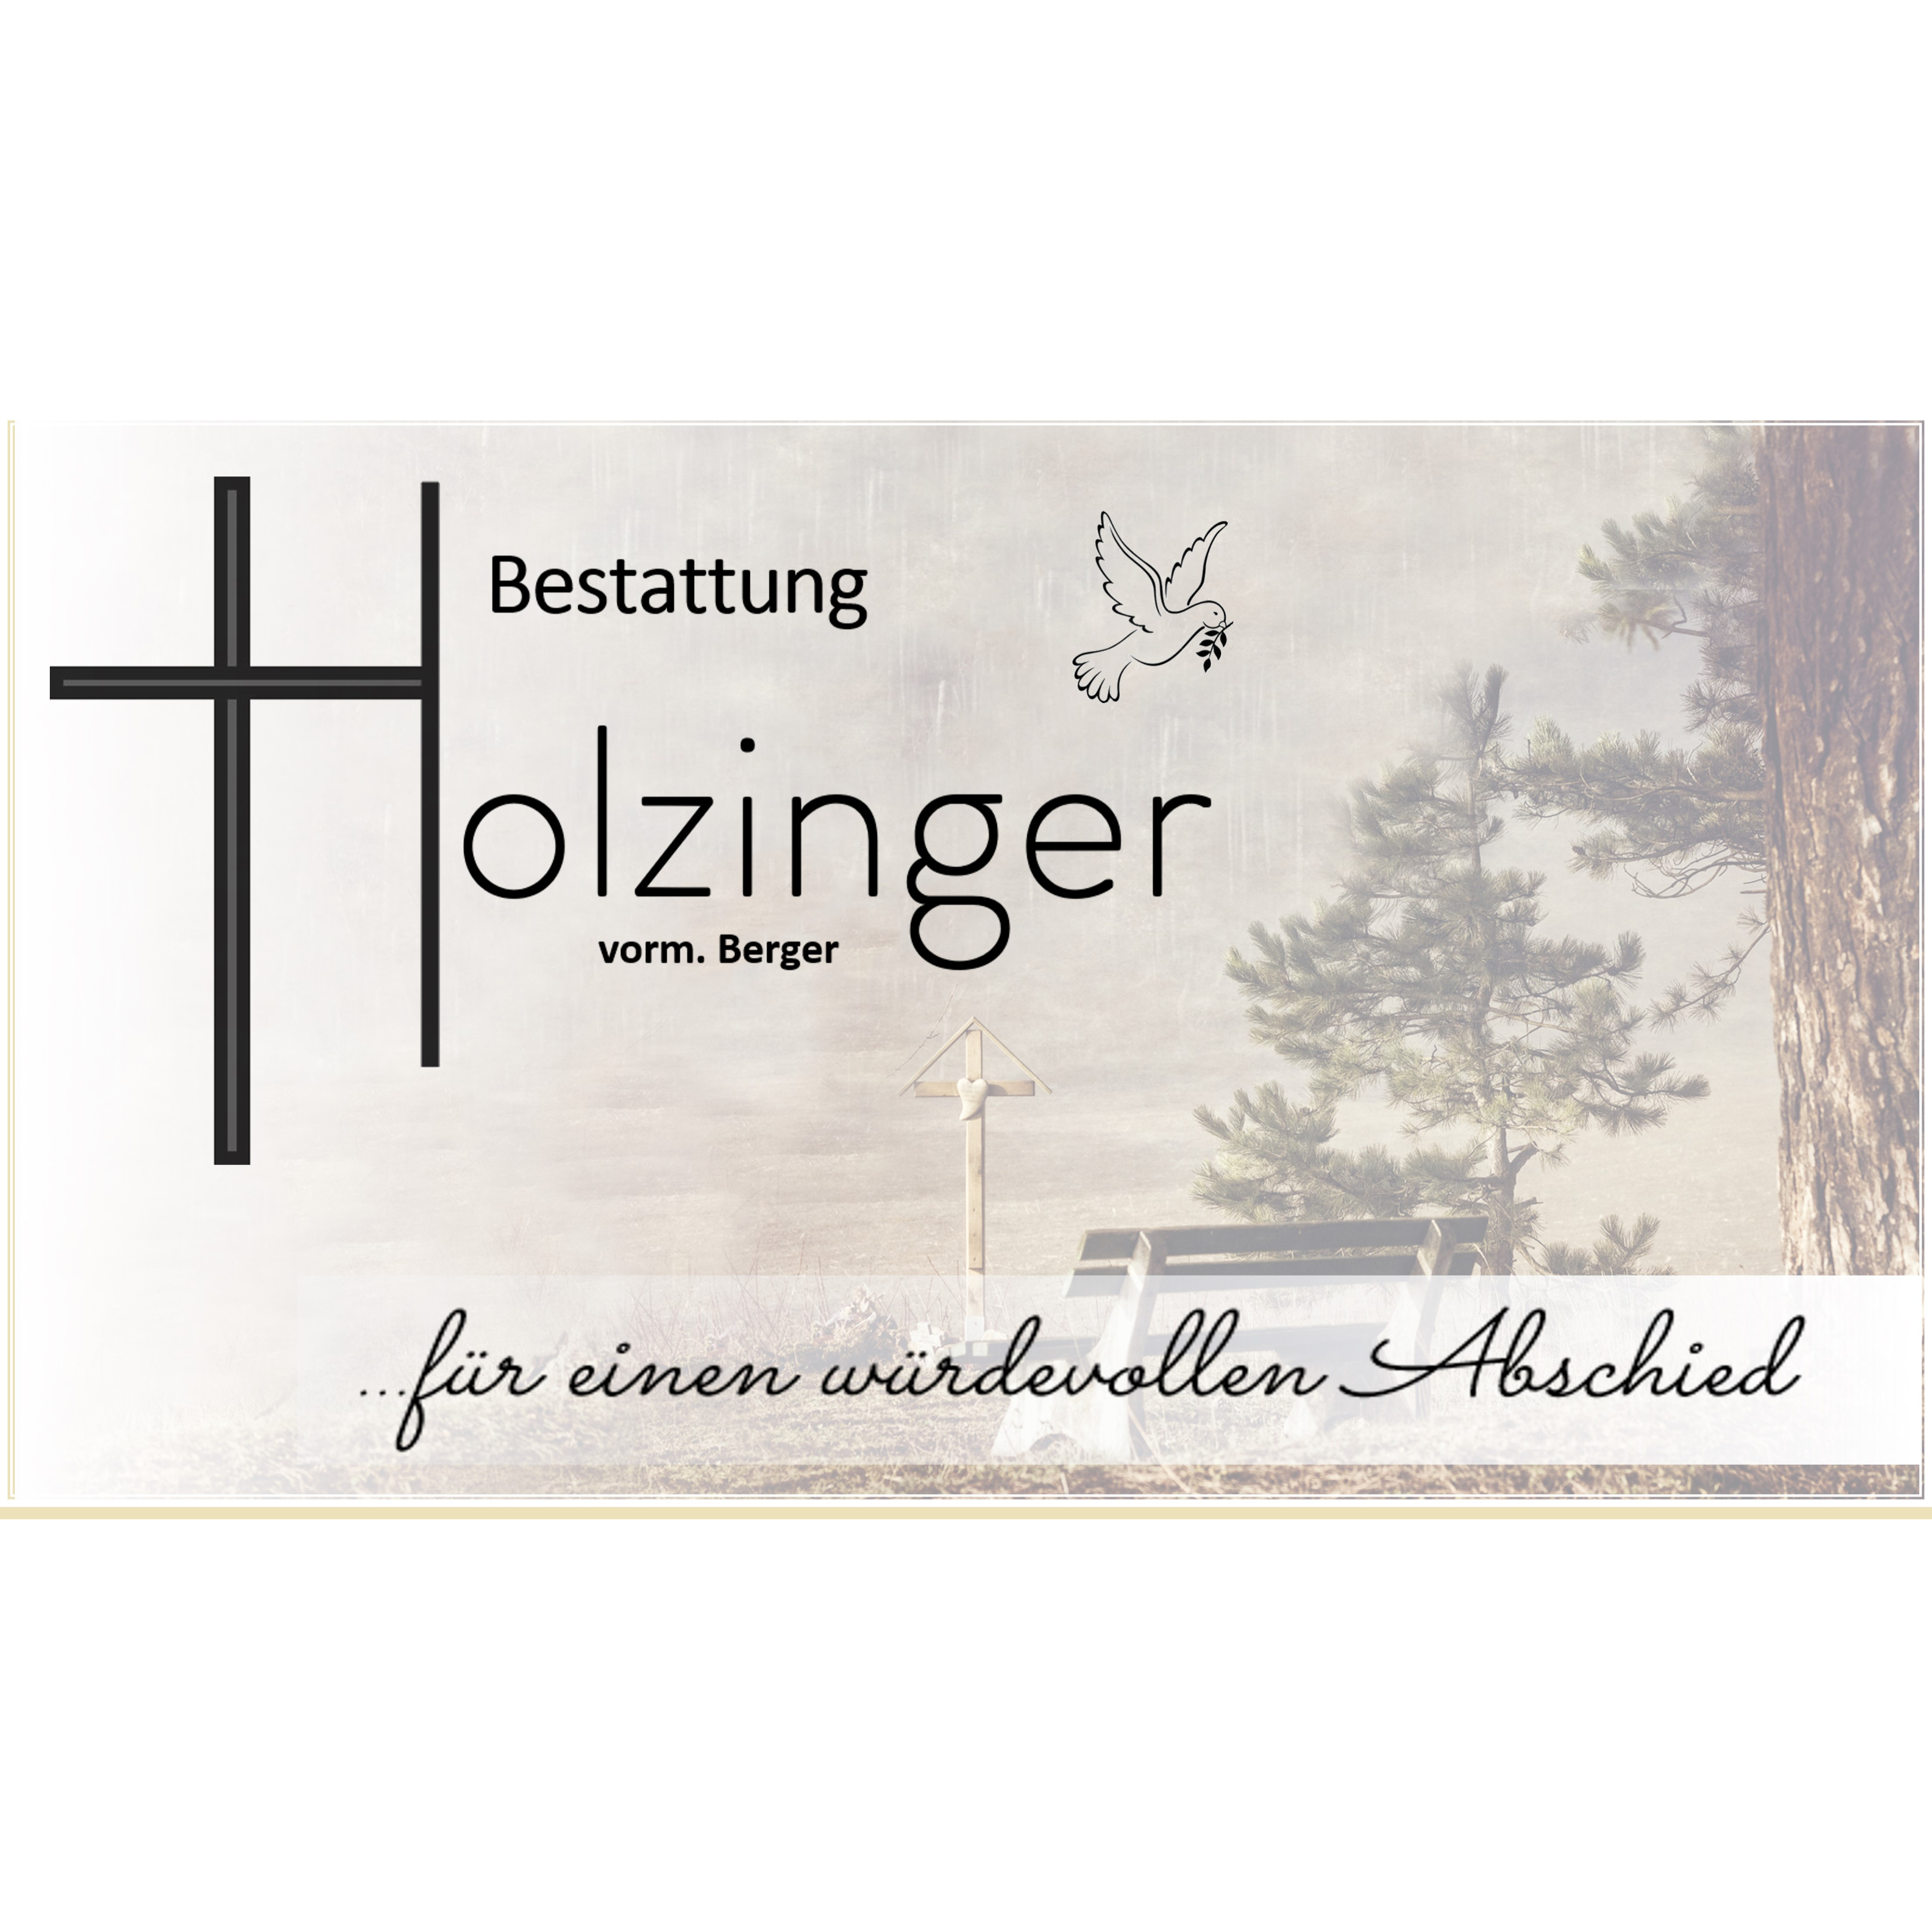 Bestattung Holzinger, vormals Berger